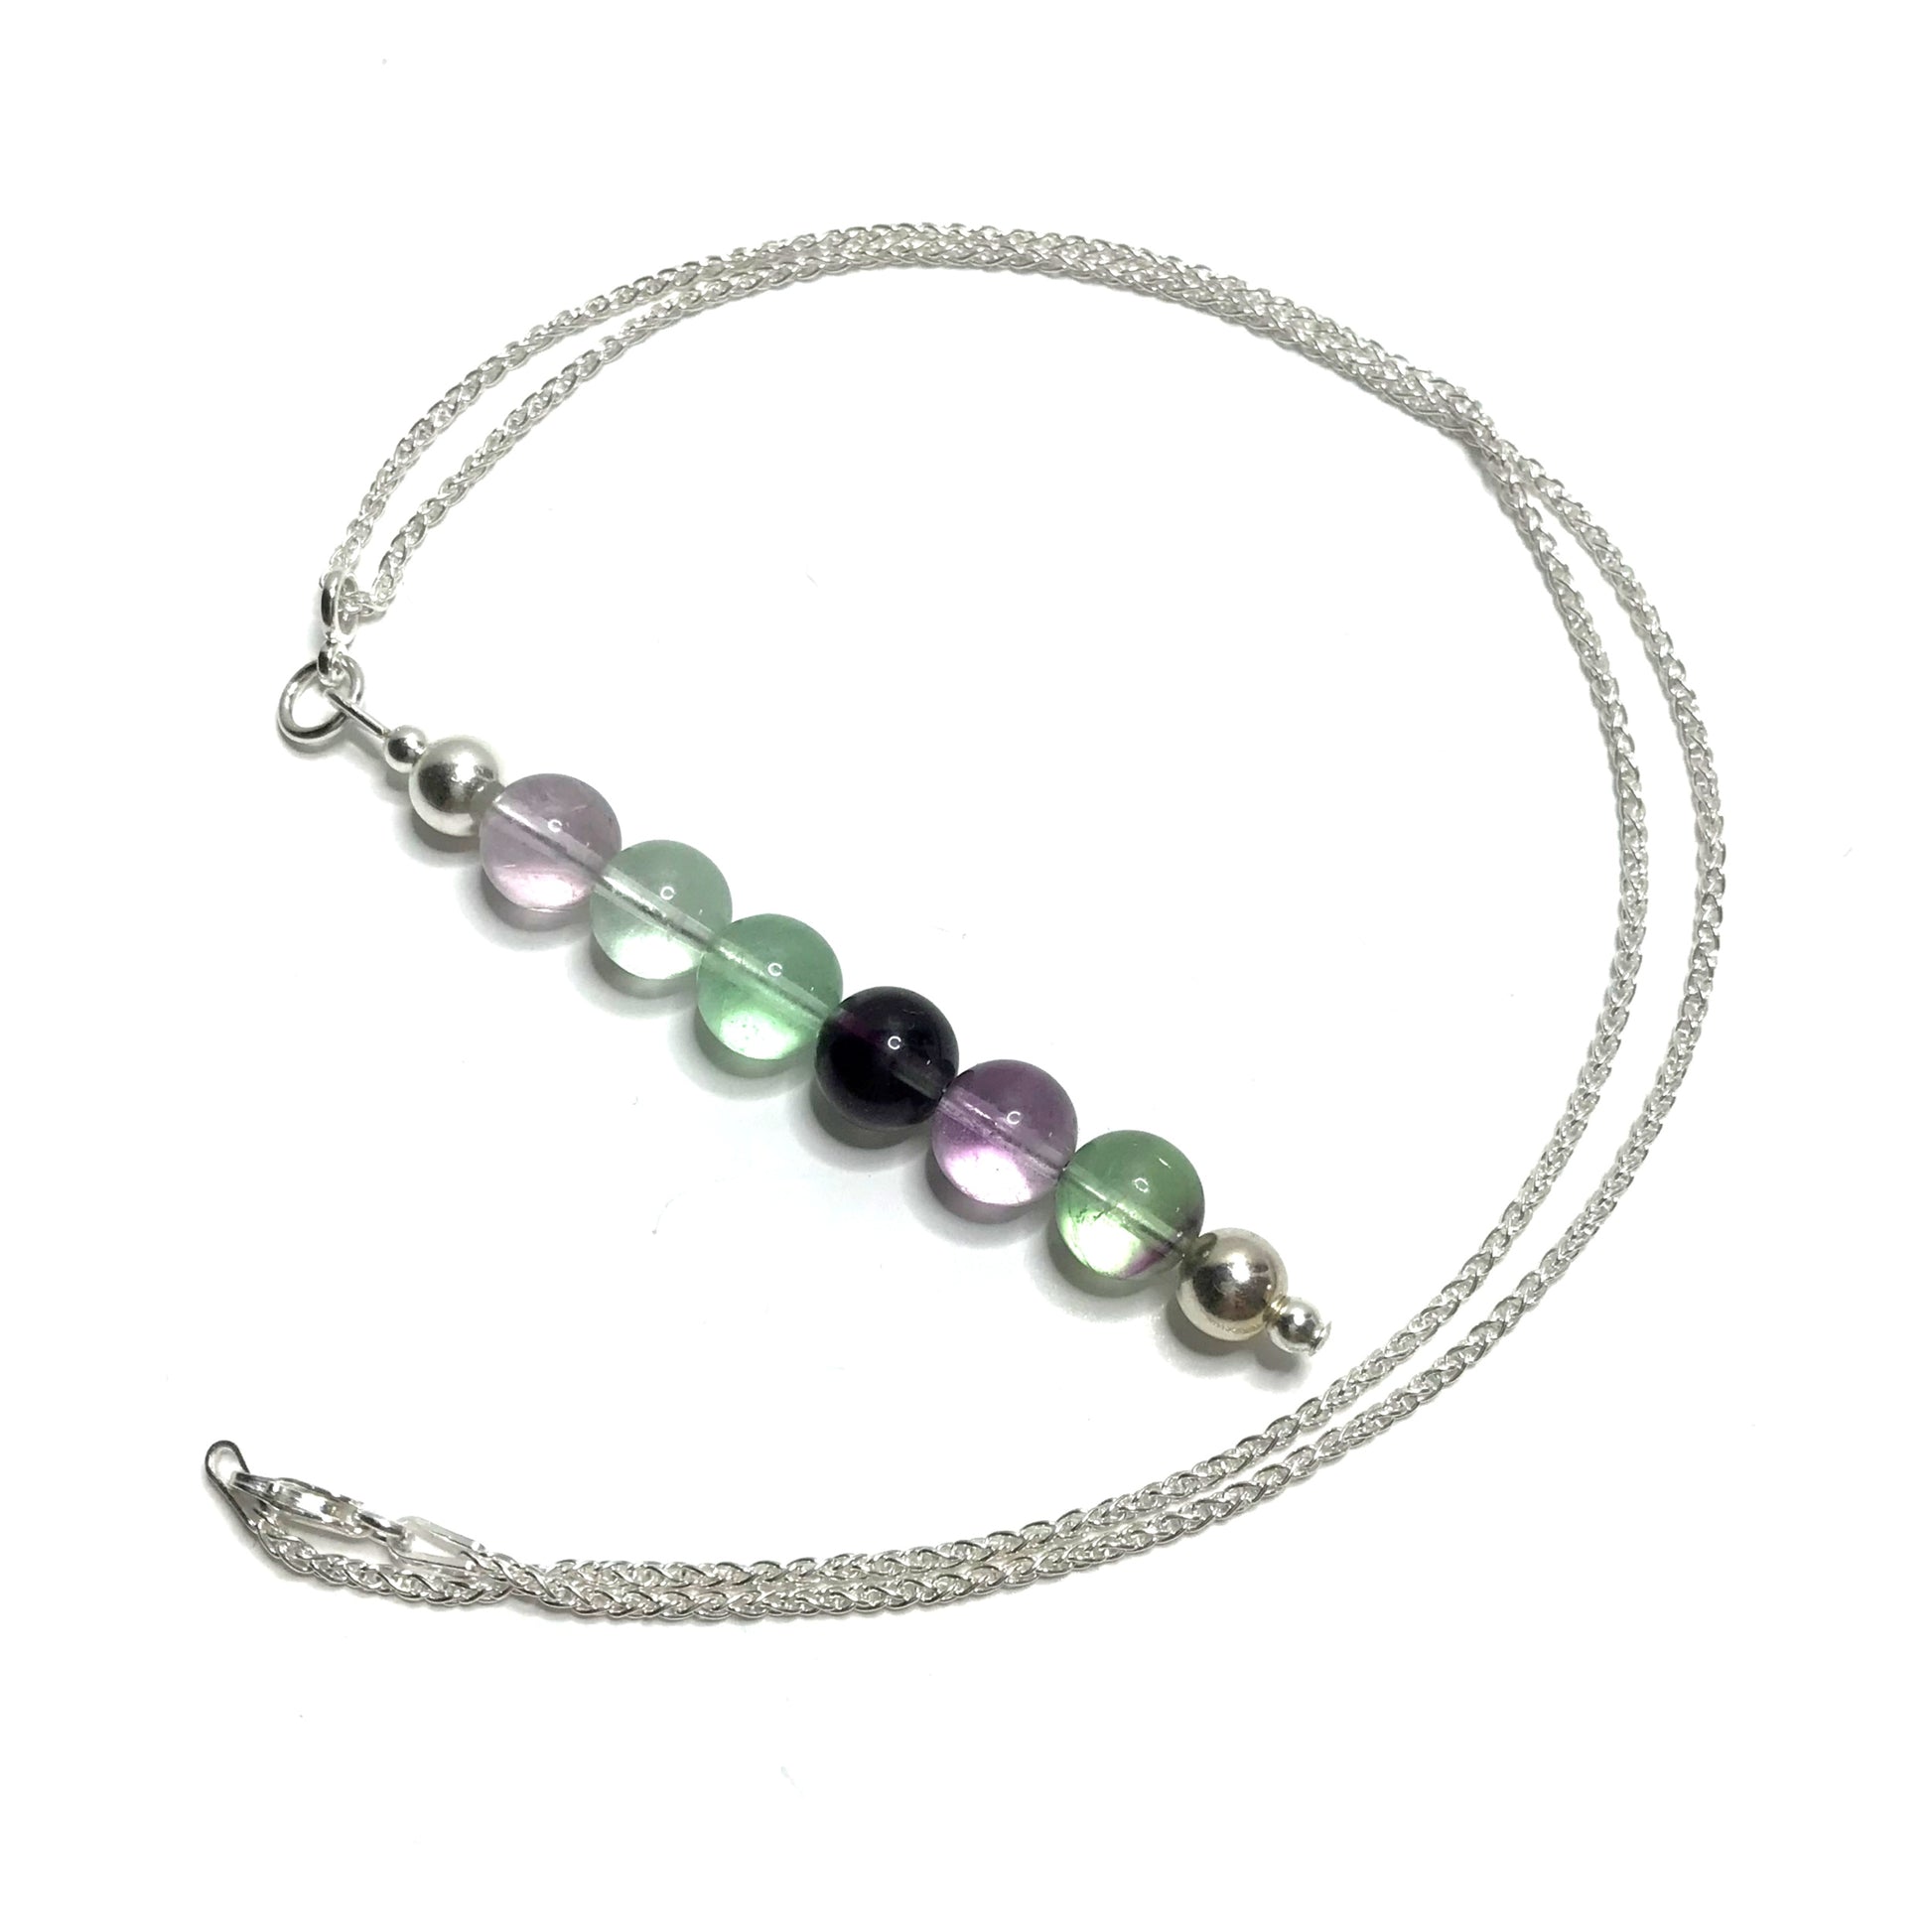 Rainbow fluorite crystal pendant on a silver chain